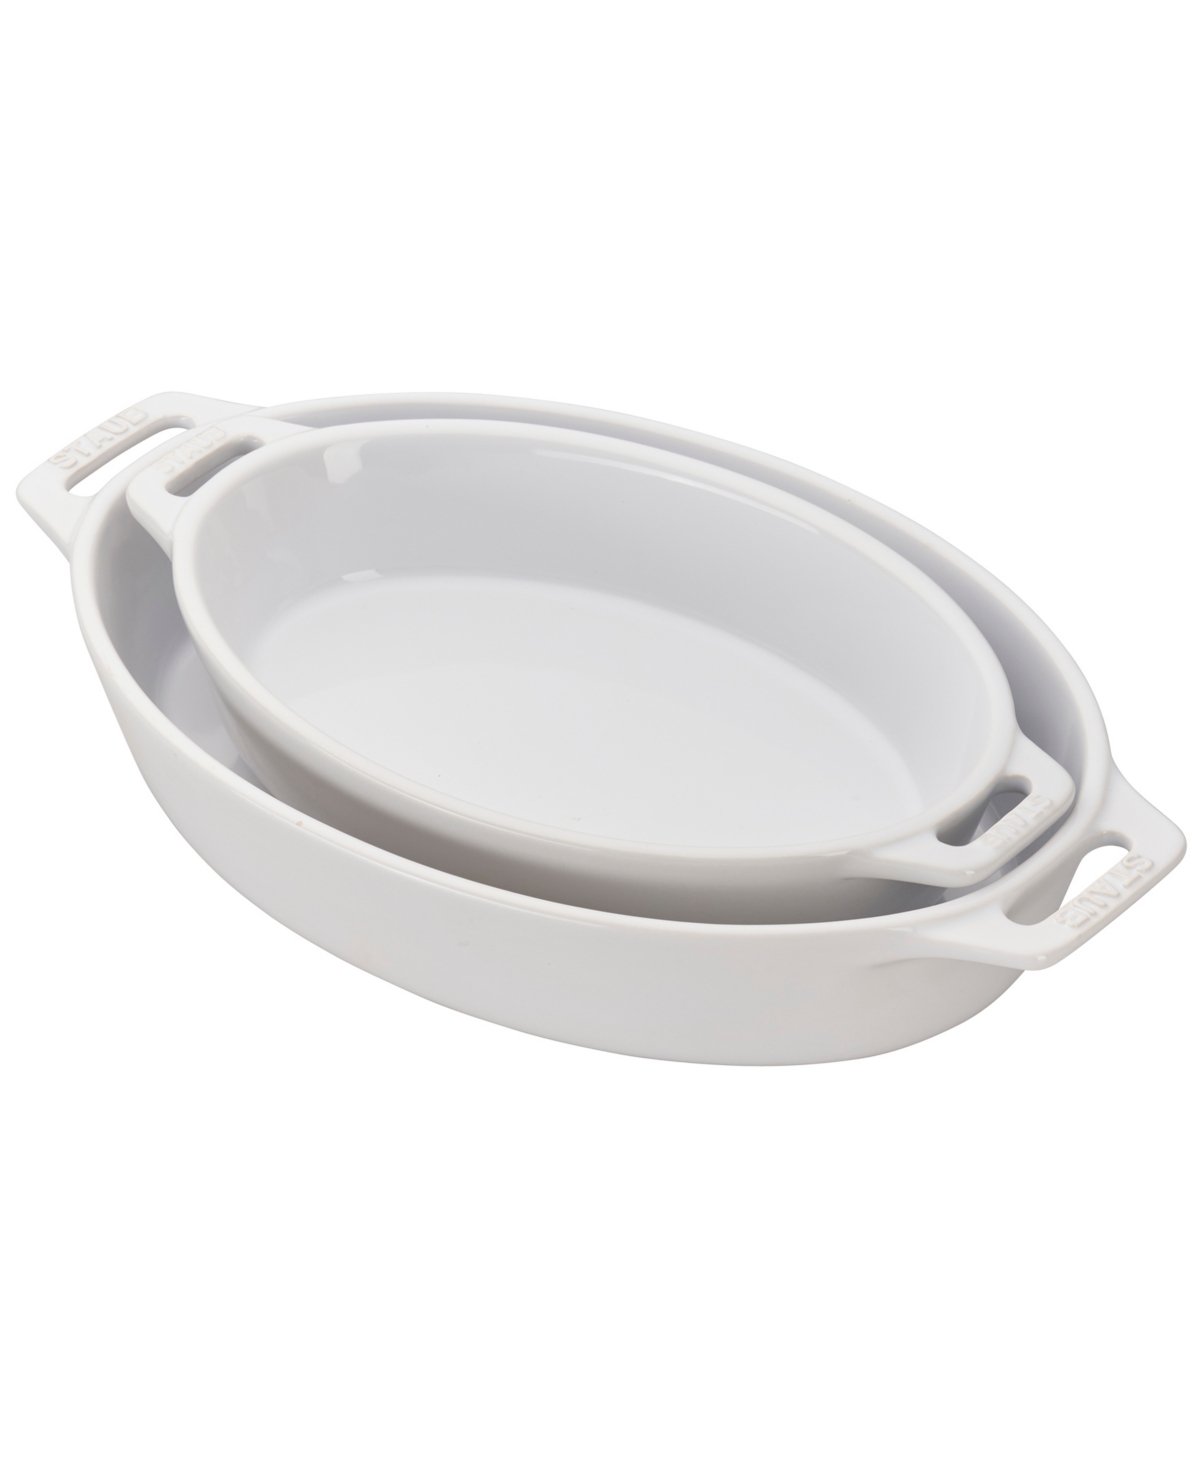 Staub Ceramic 2 Piece Oval Baking Dish Set In White